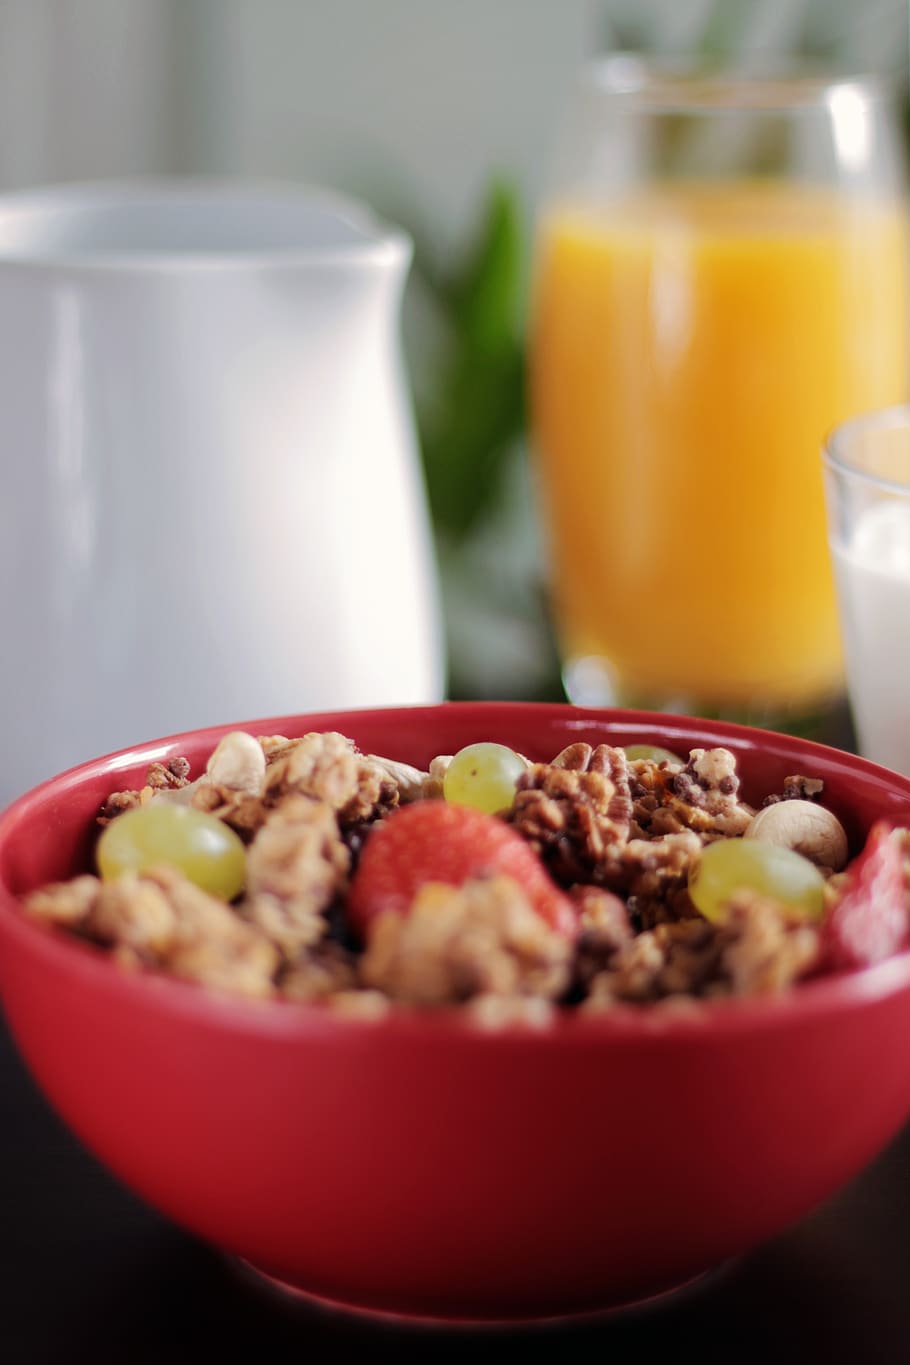 muesli, cereal, breakfast, granola, fruits, healthy, food, nuts, bowl, orange juice